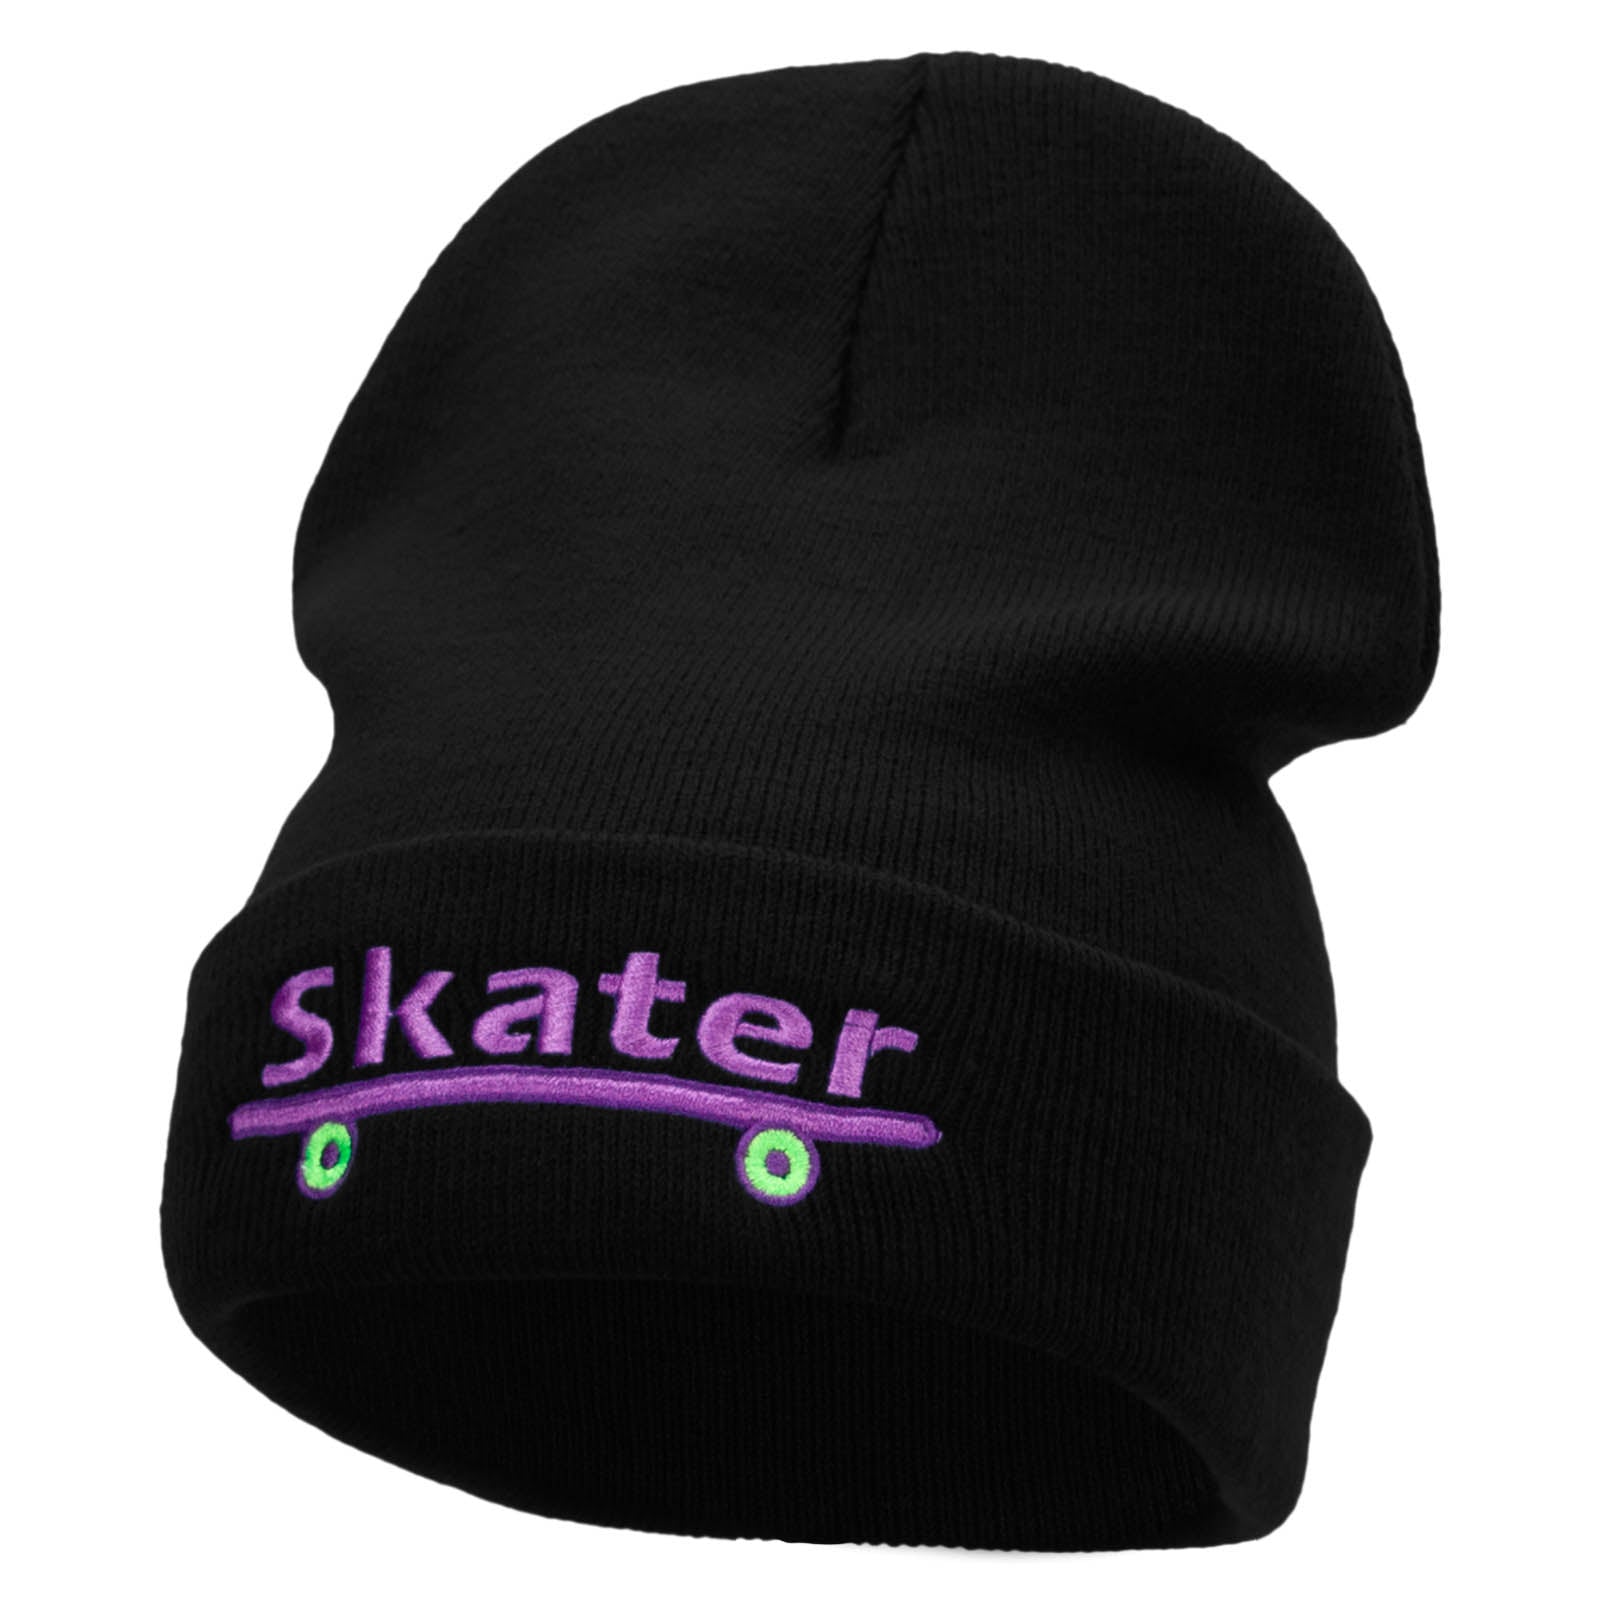 Skater Embroidered 12 Inch Long Knitted Beanie - Black OSFM